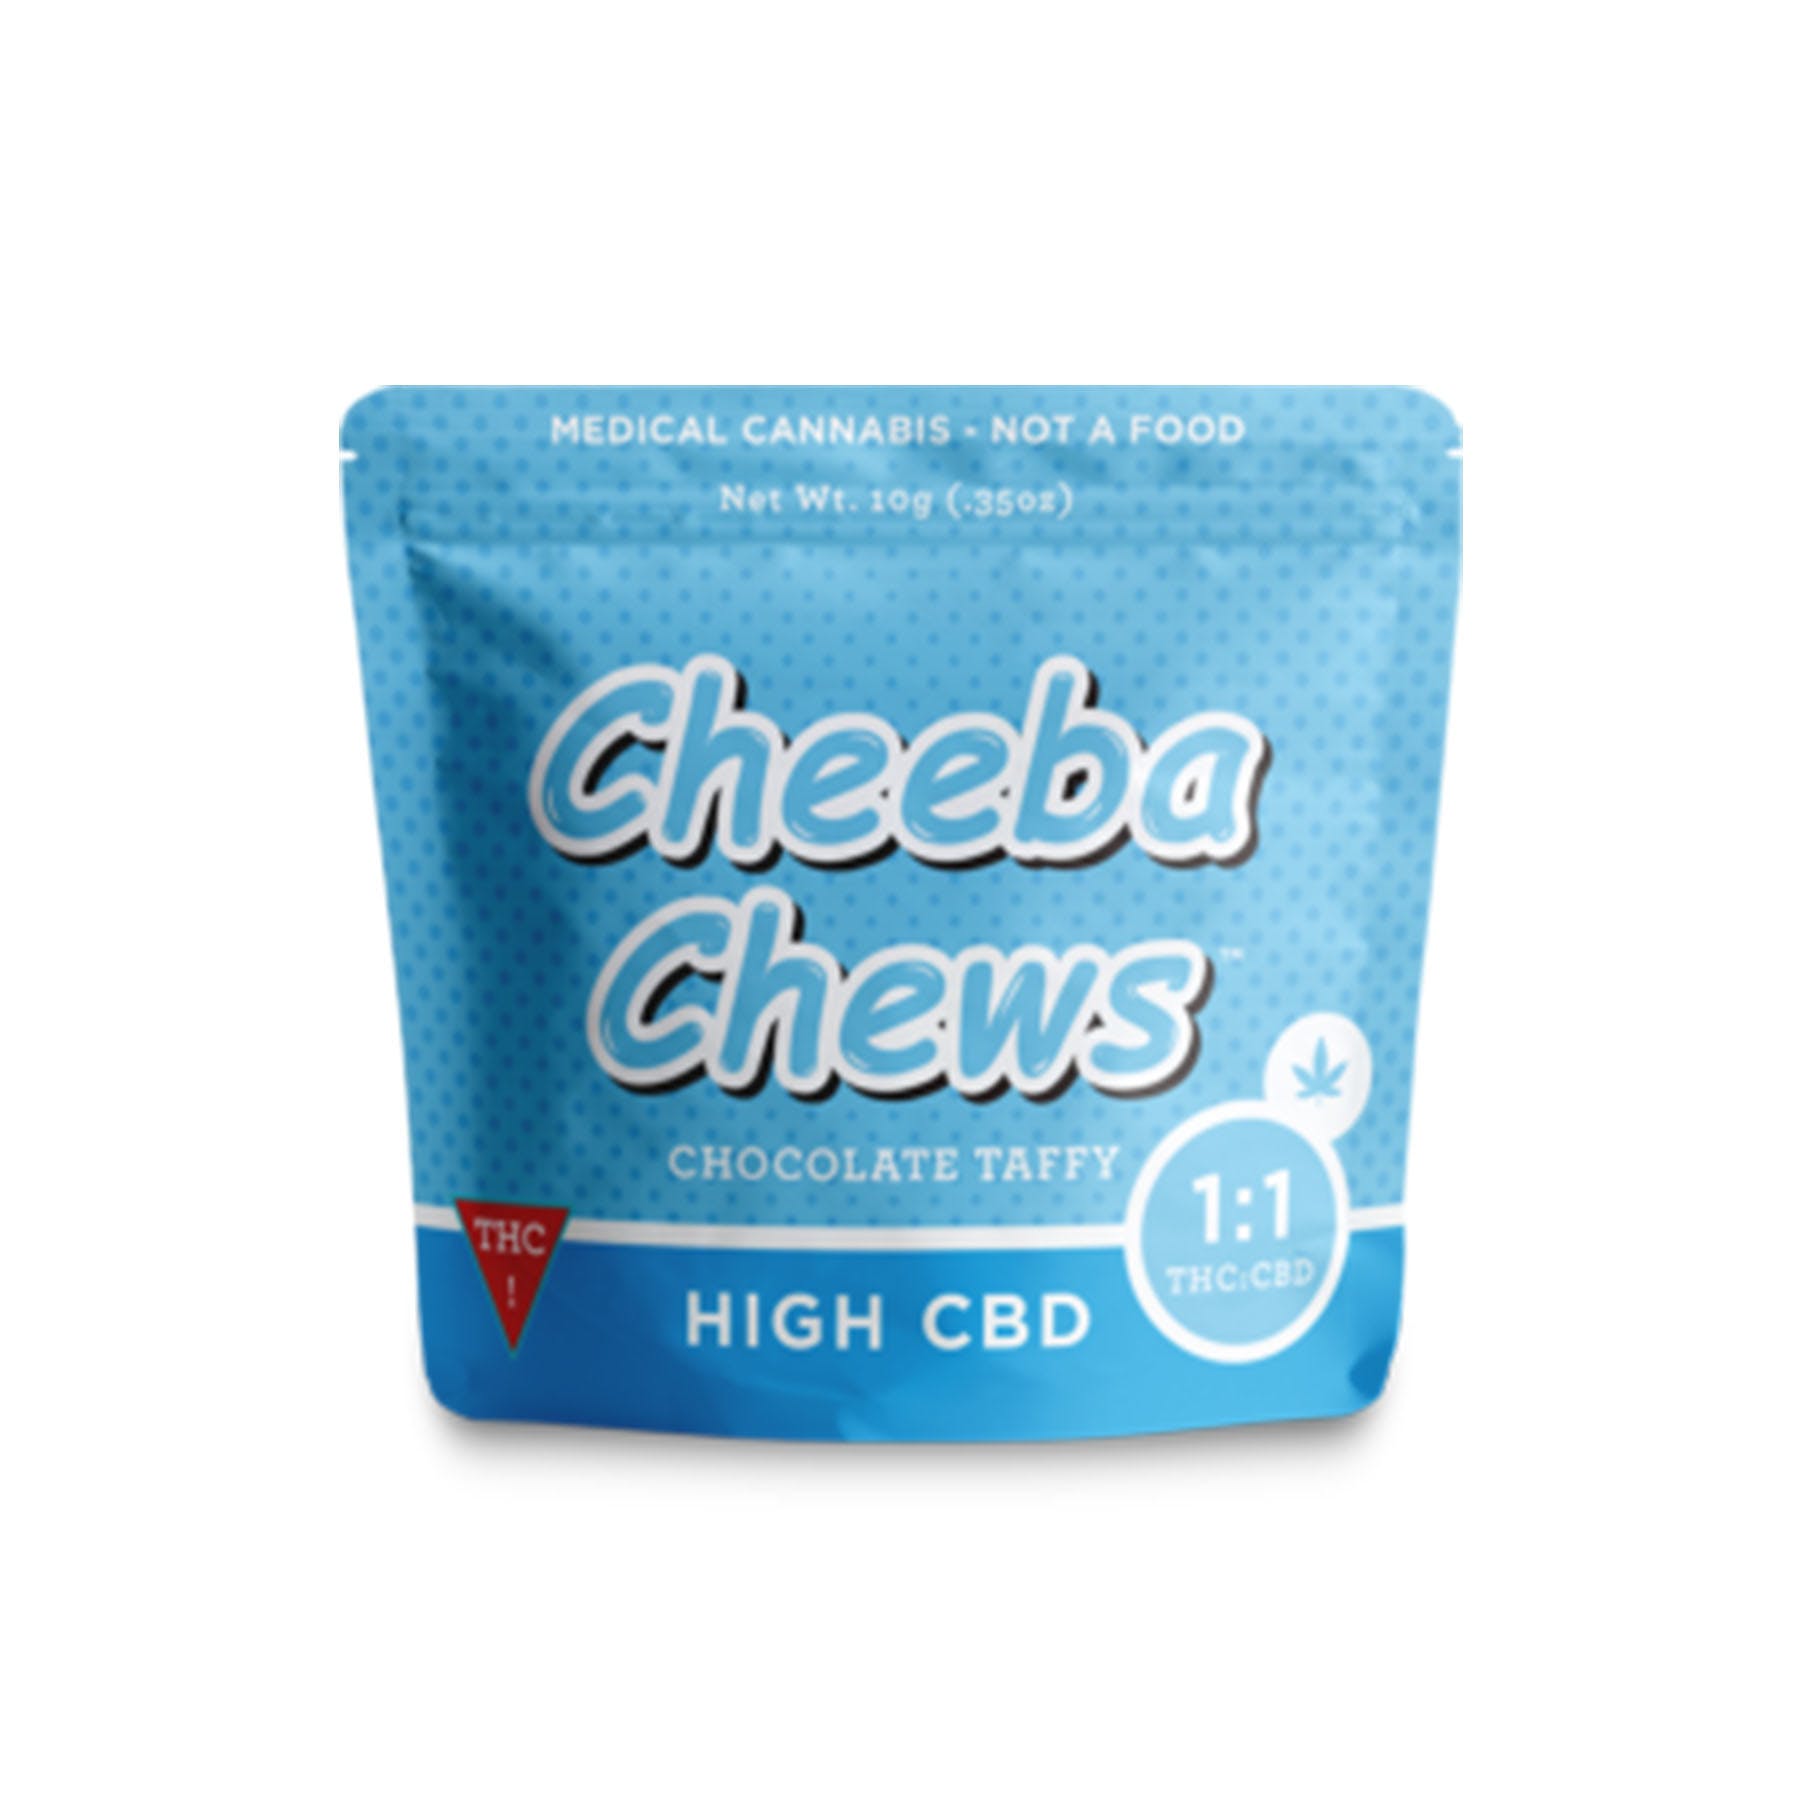 edible-cheeba-chew-11-50mg-thc50mg-cbd